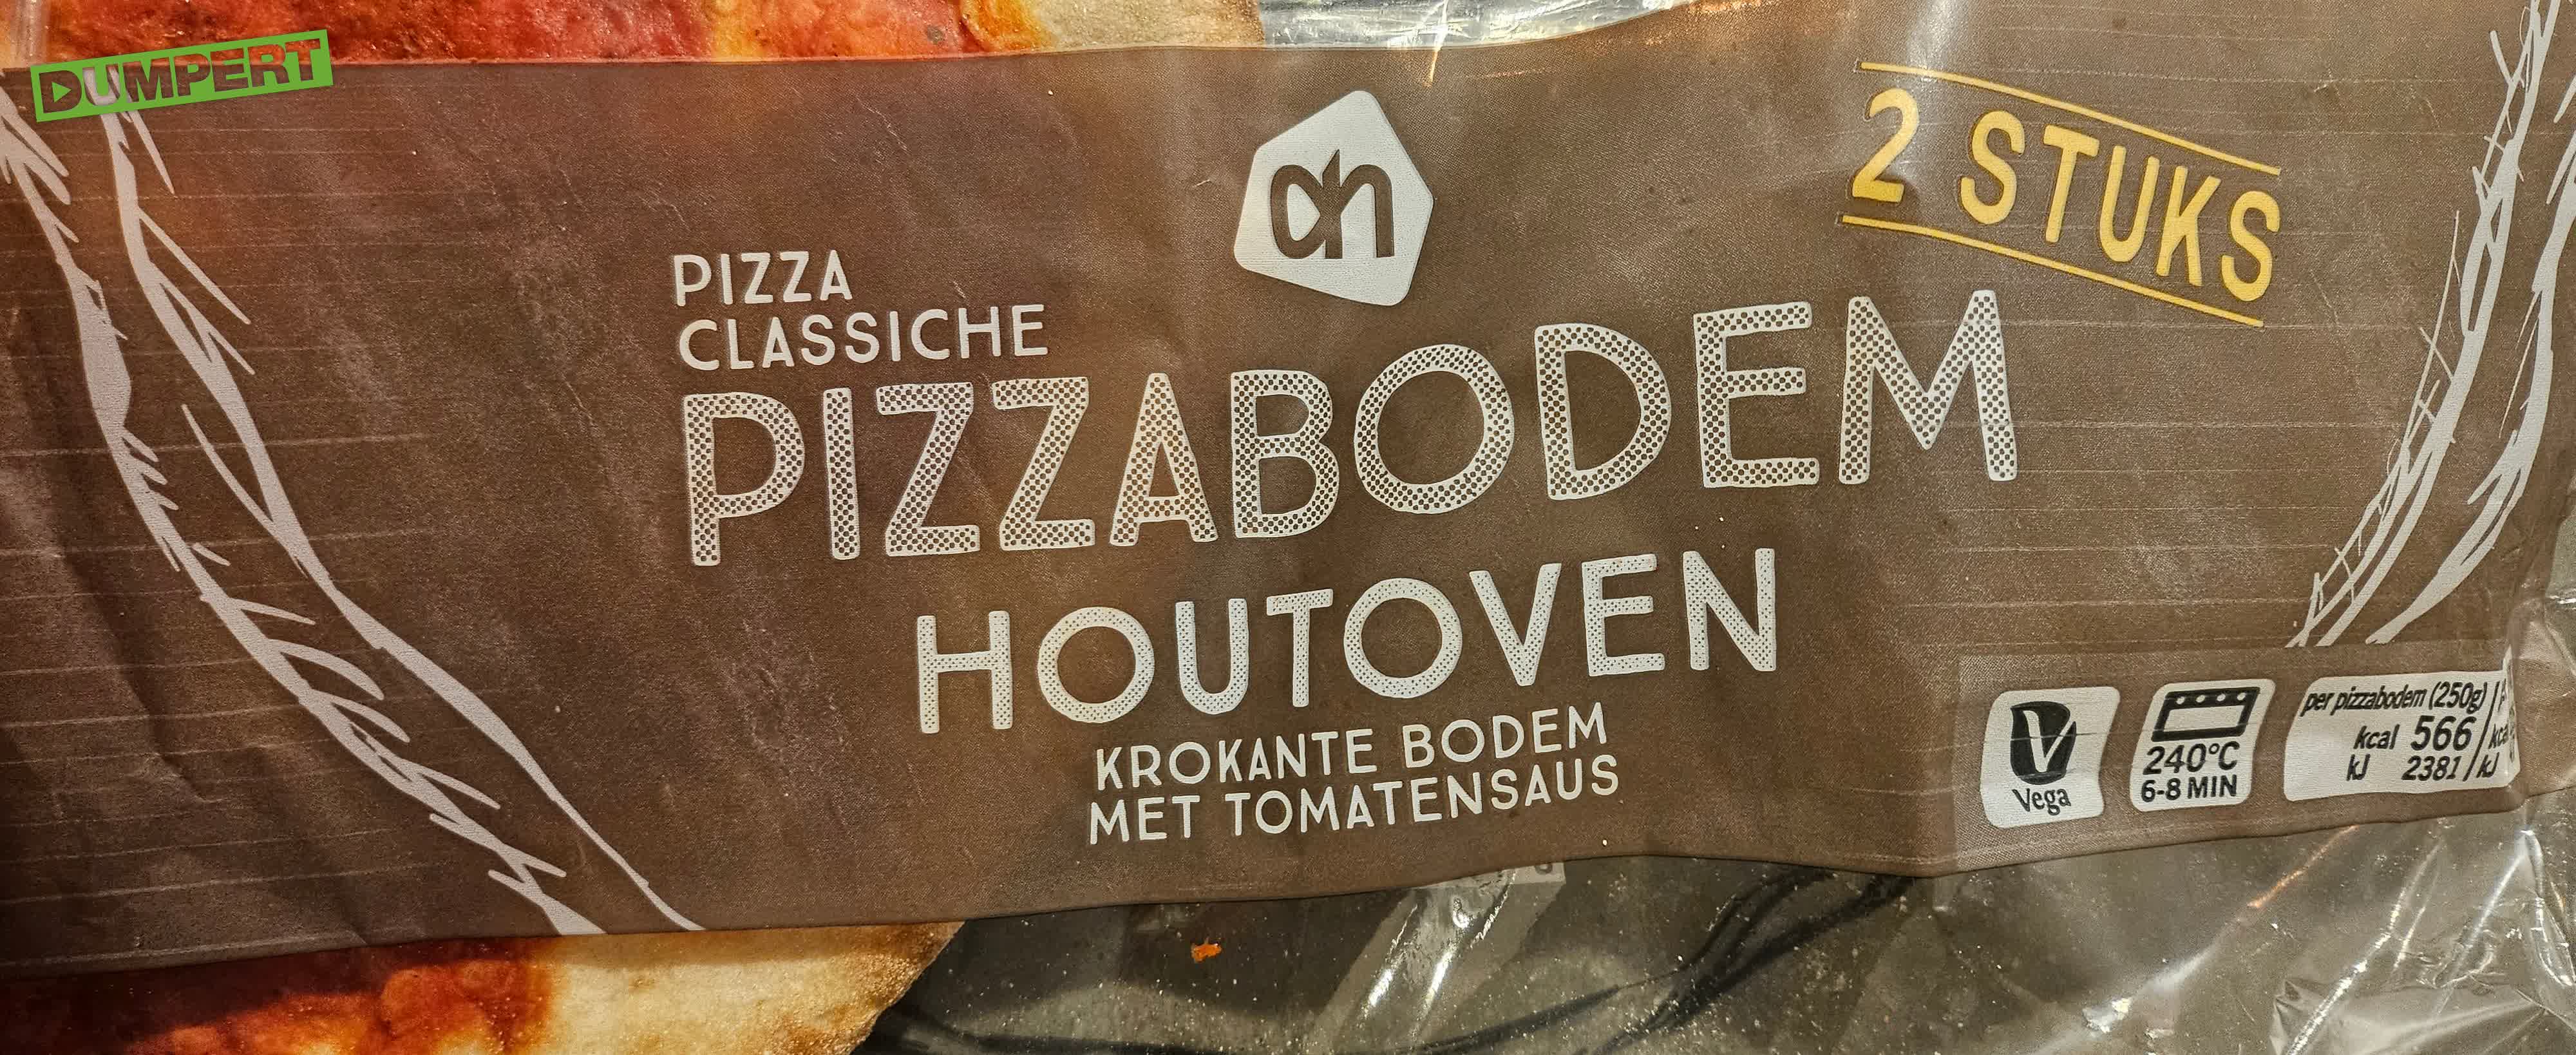 AH Pizzabodem